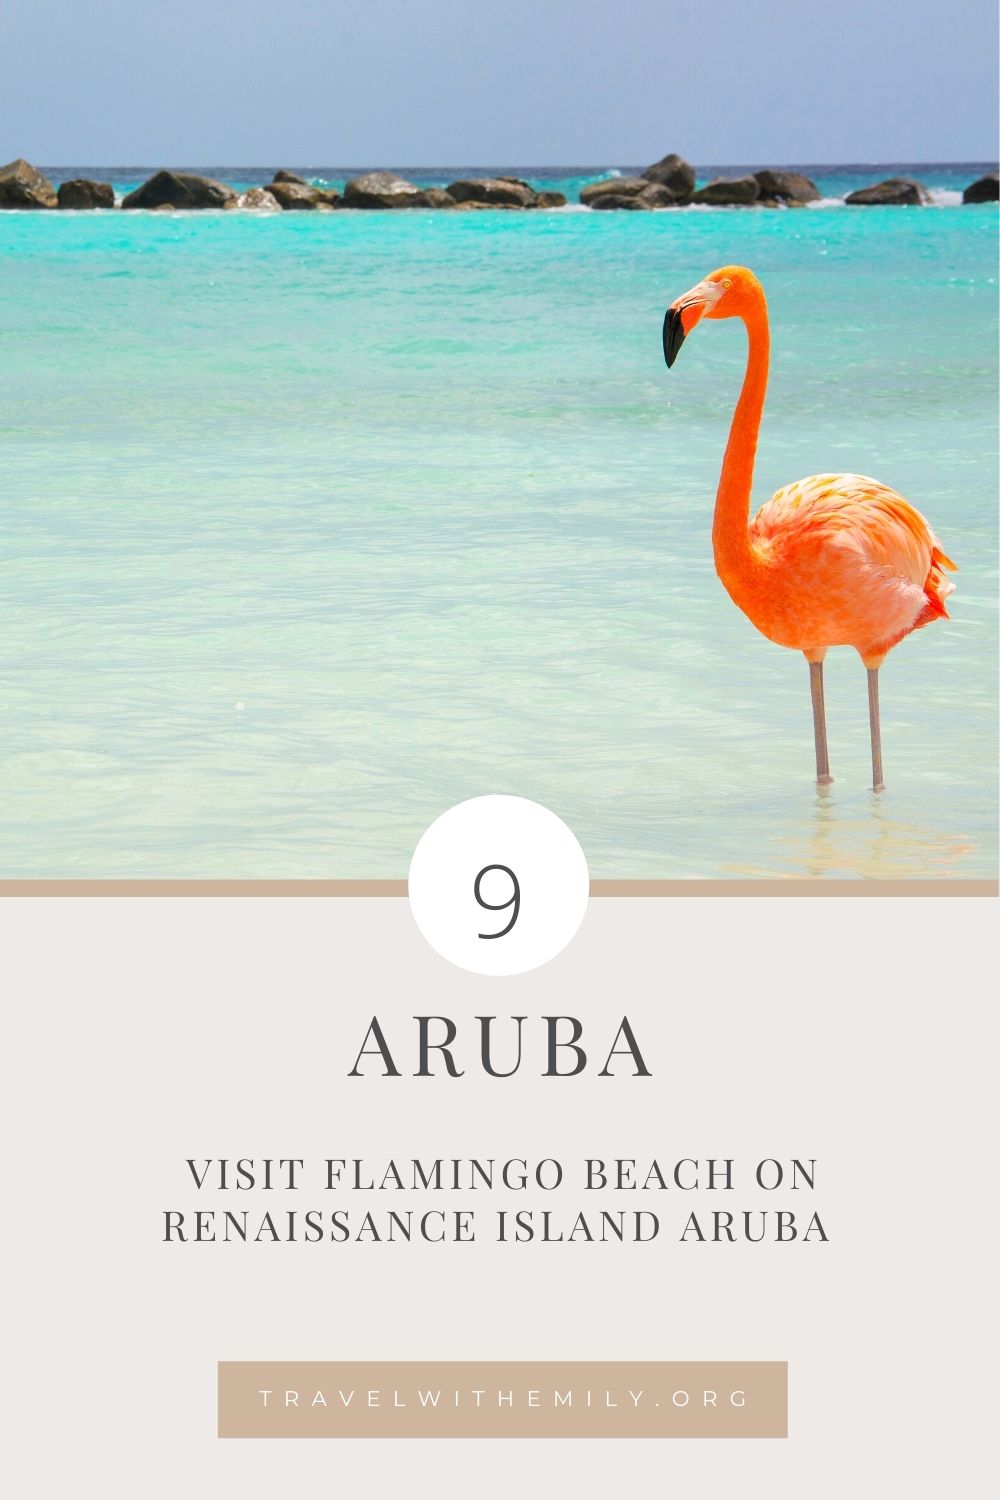 luxury beach holiday - Aruba